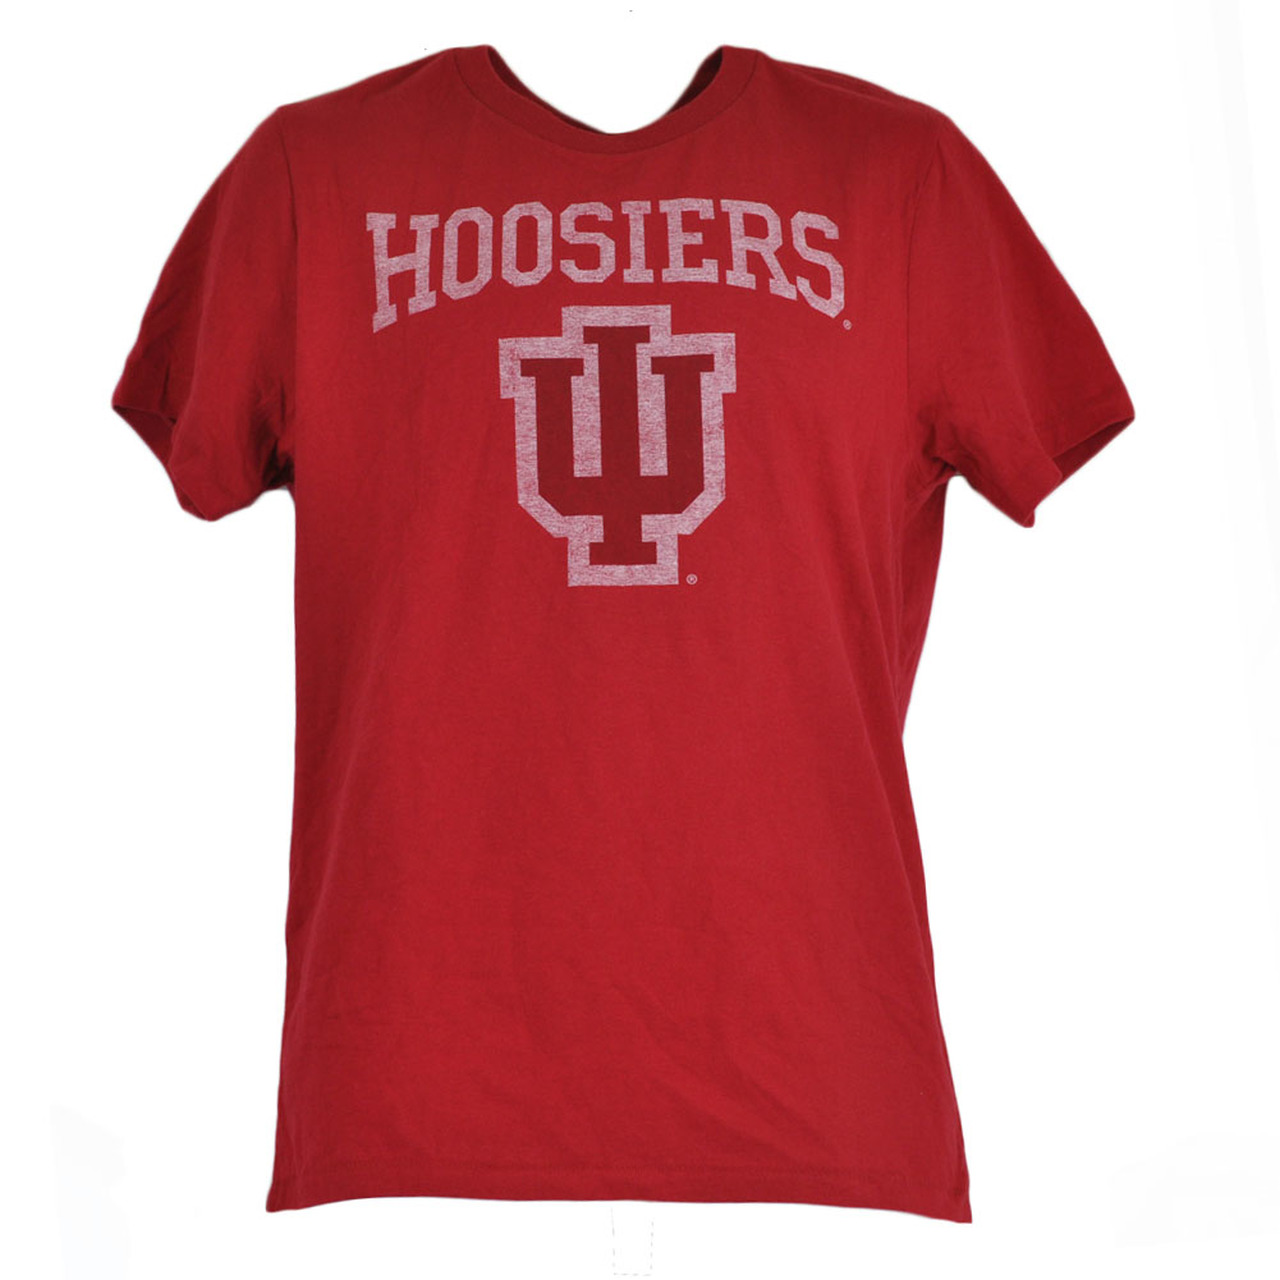 NCAA Indiana Hoosiers Distressed Red Basic Logo College Shirt Tshirt Tee.